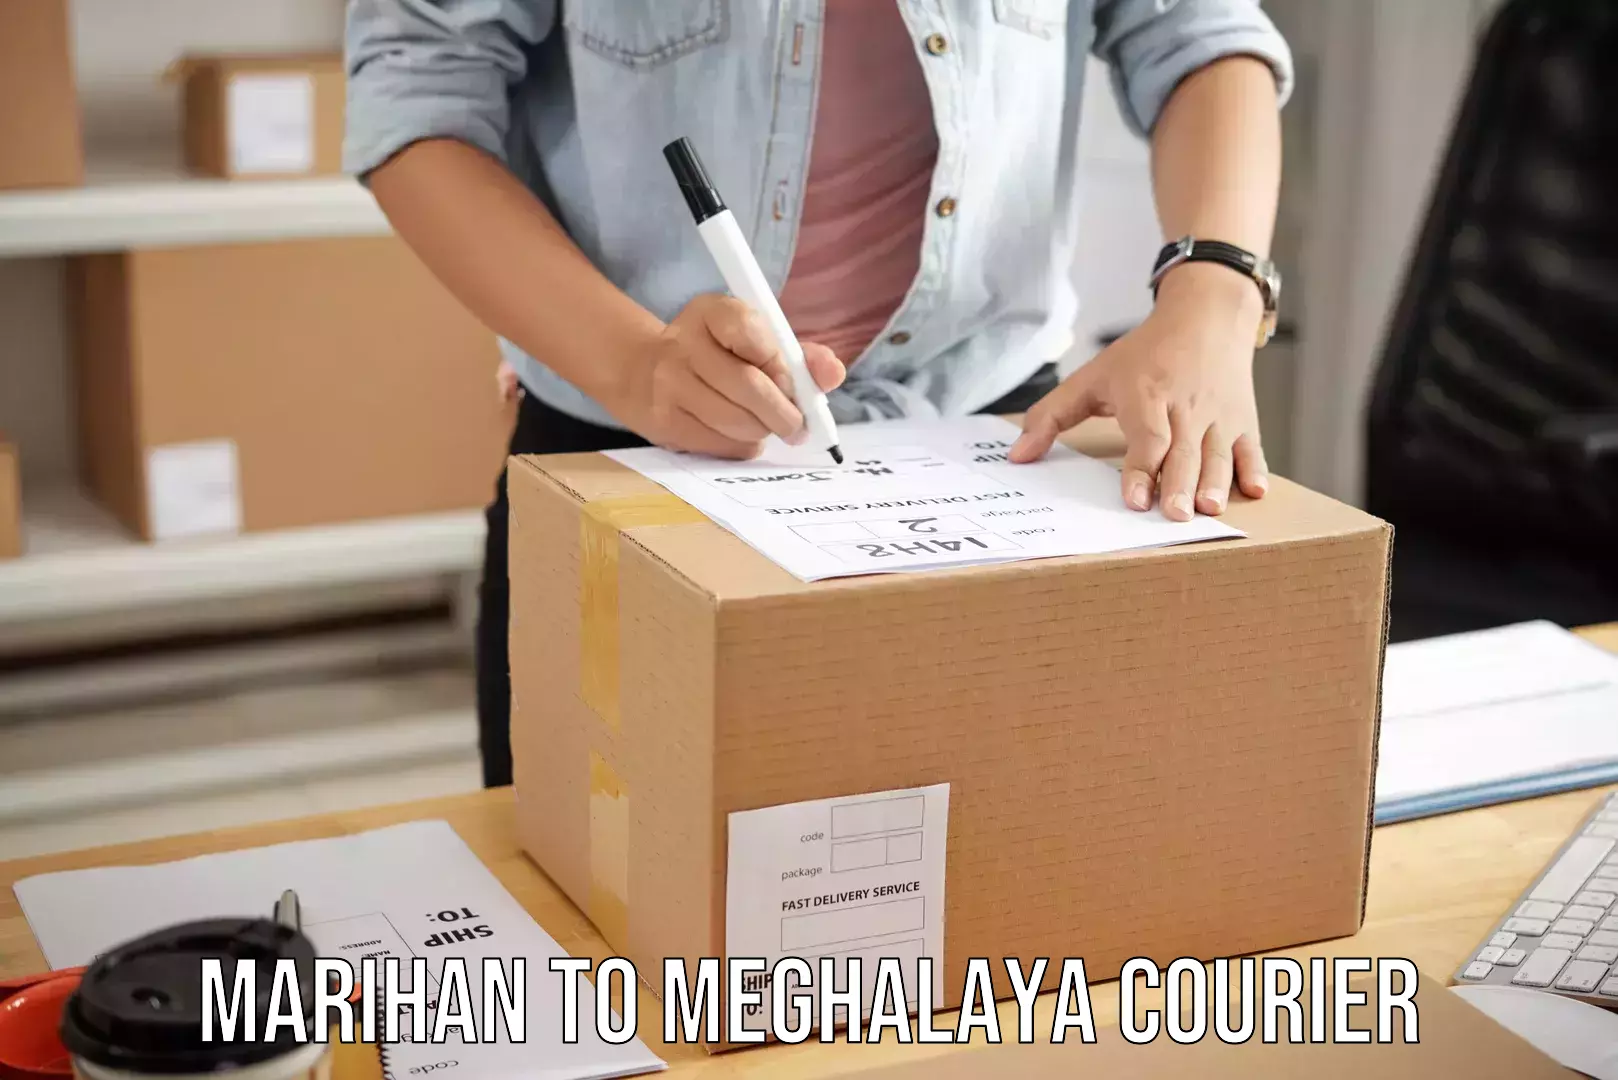 Luggage shipment processing Marihan to Meghalaya